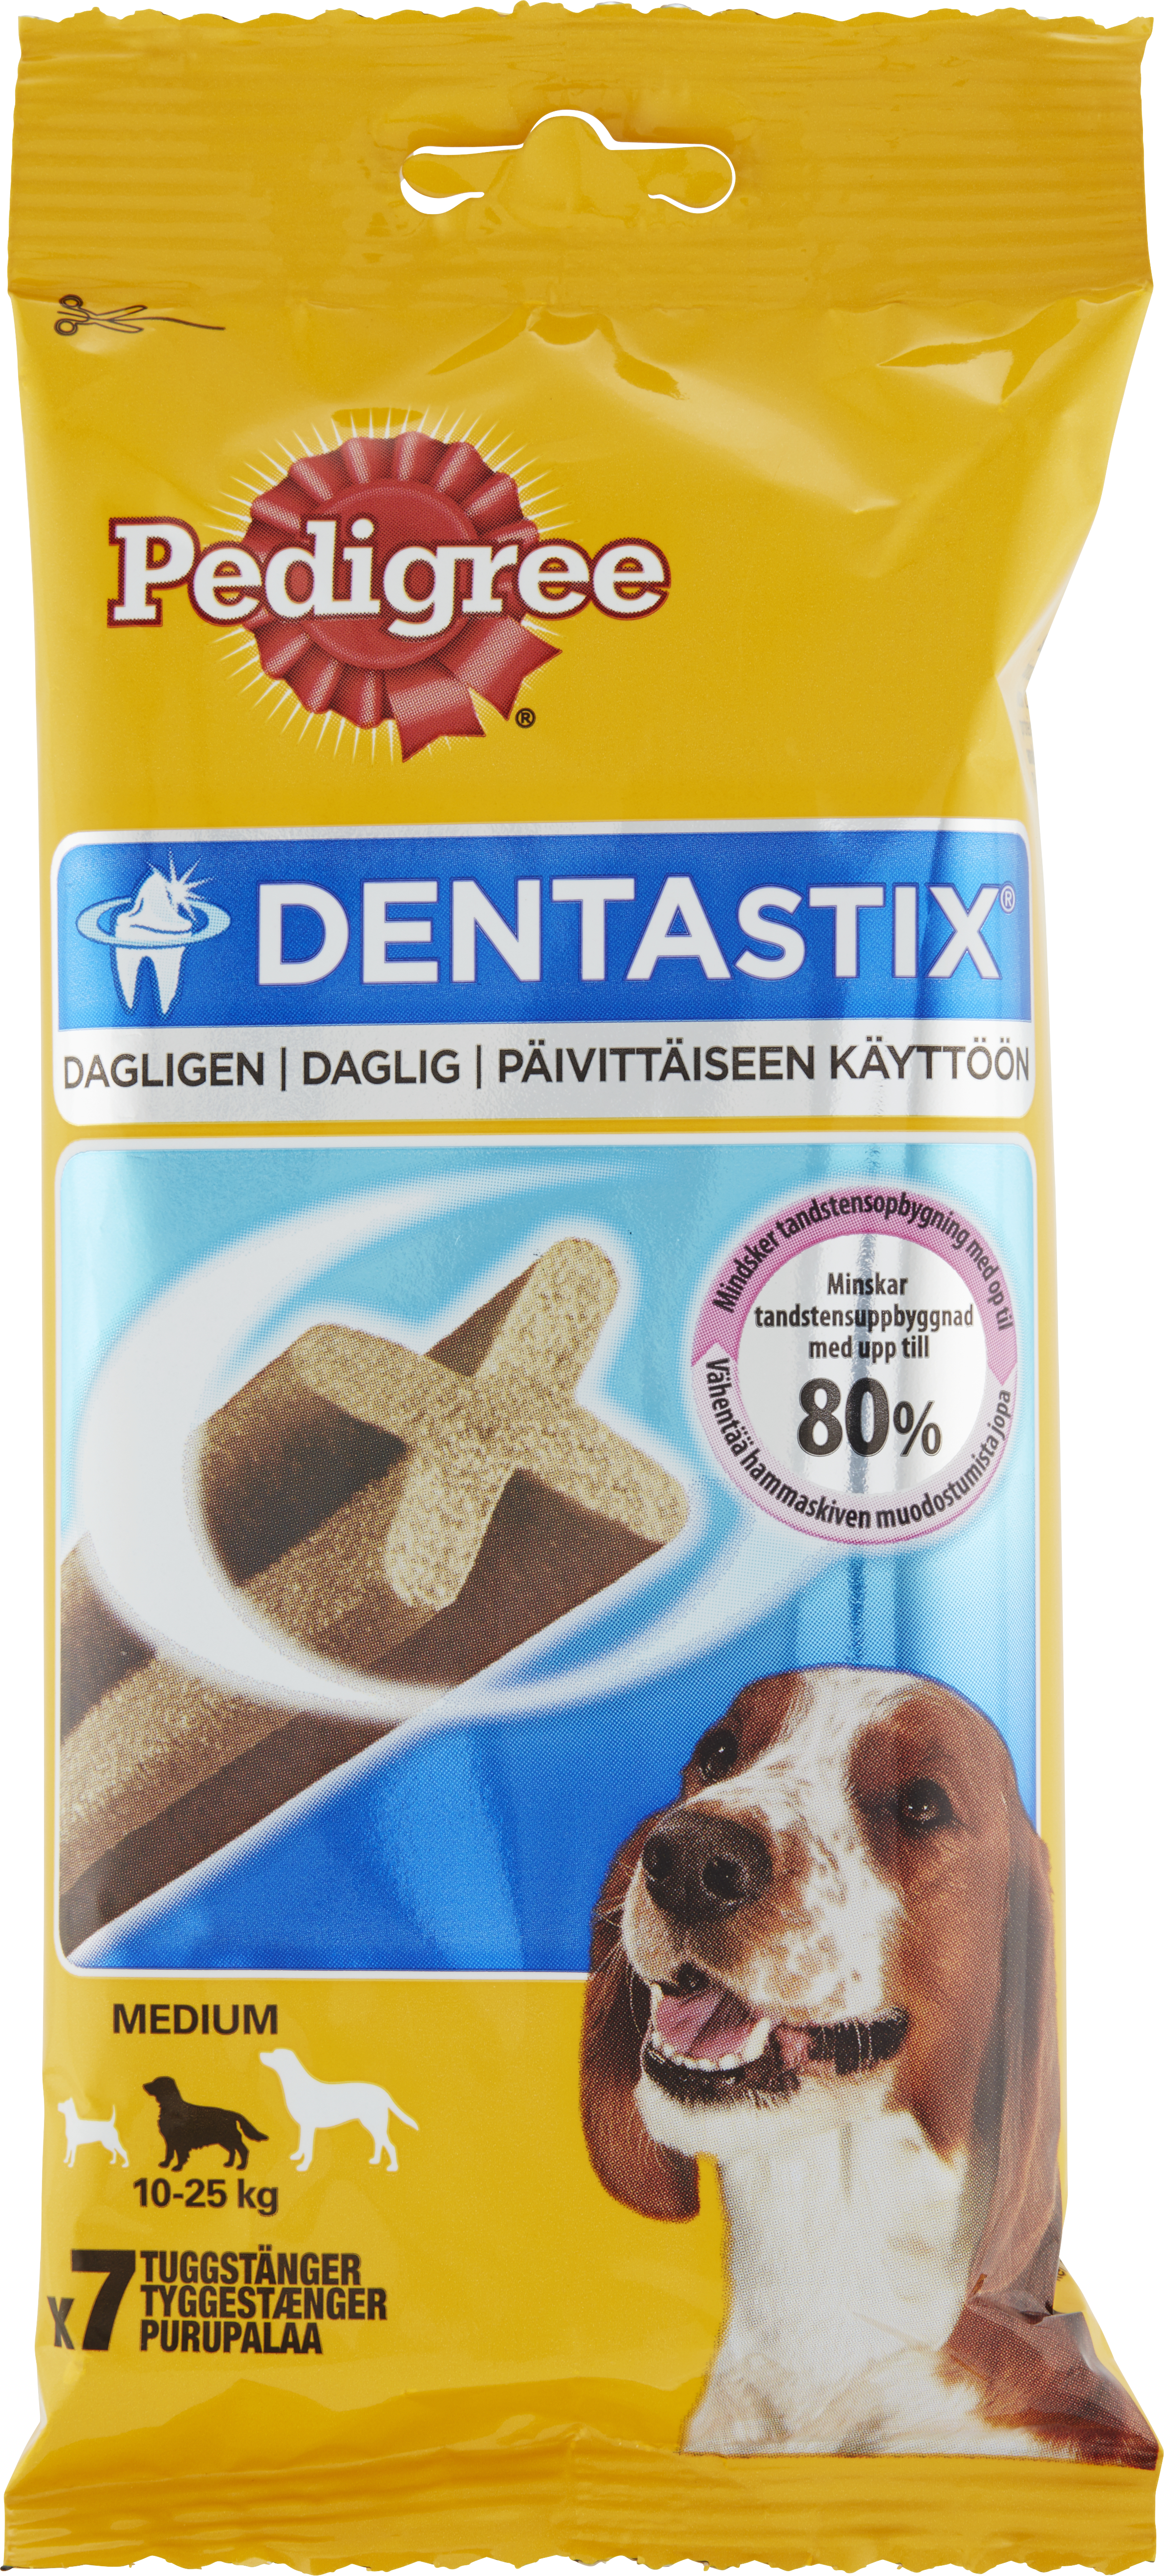 Pedigree Dentastix medium 7 st